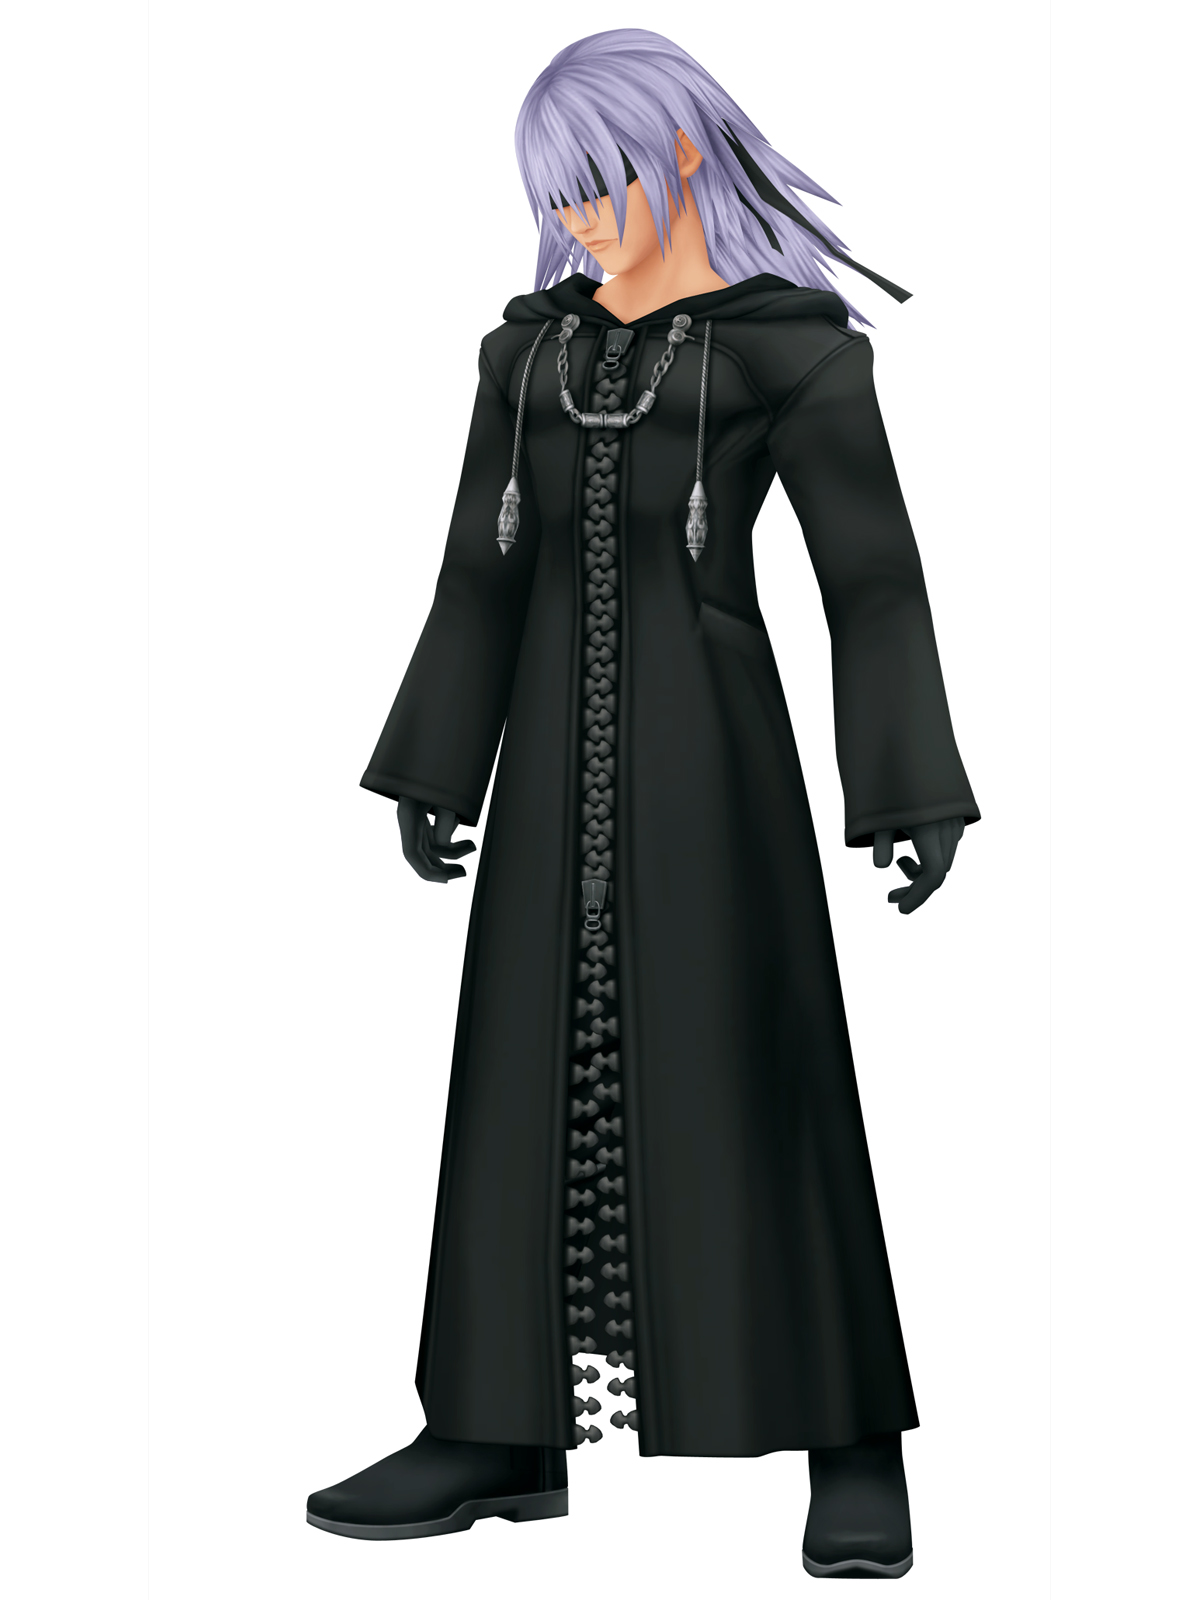 Riku (KH:FTS) | Kingdom Hearts Fanon Wiki | Fandom